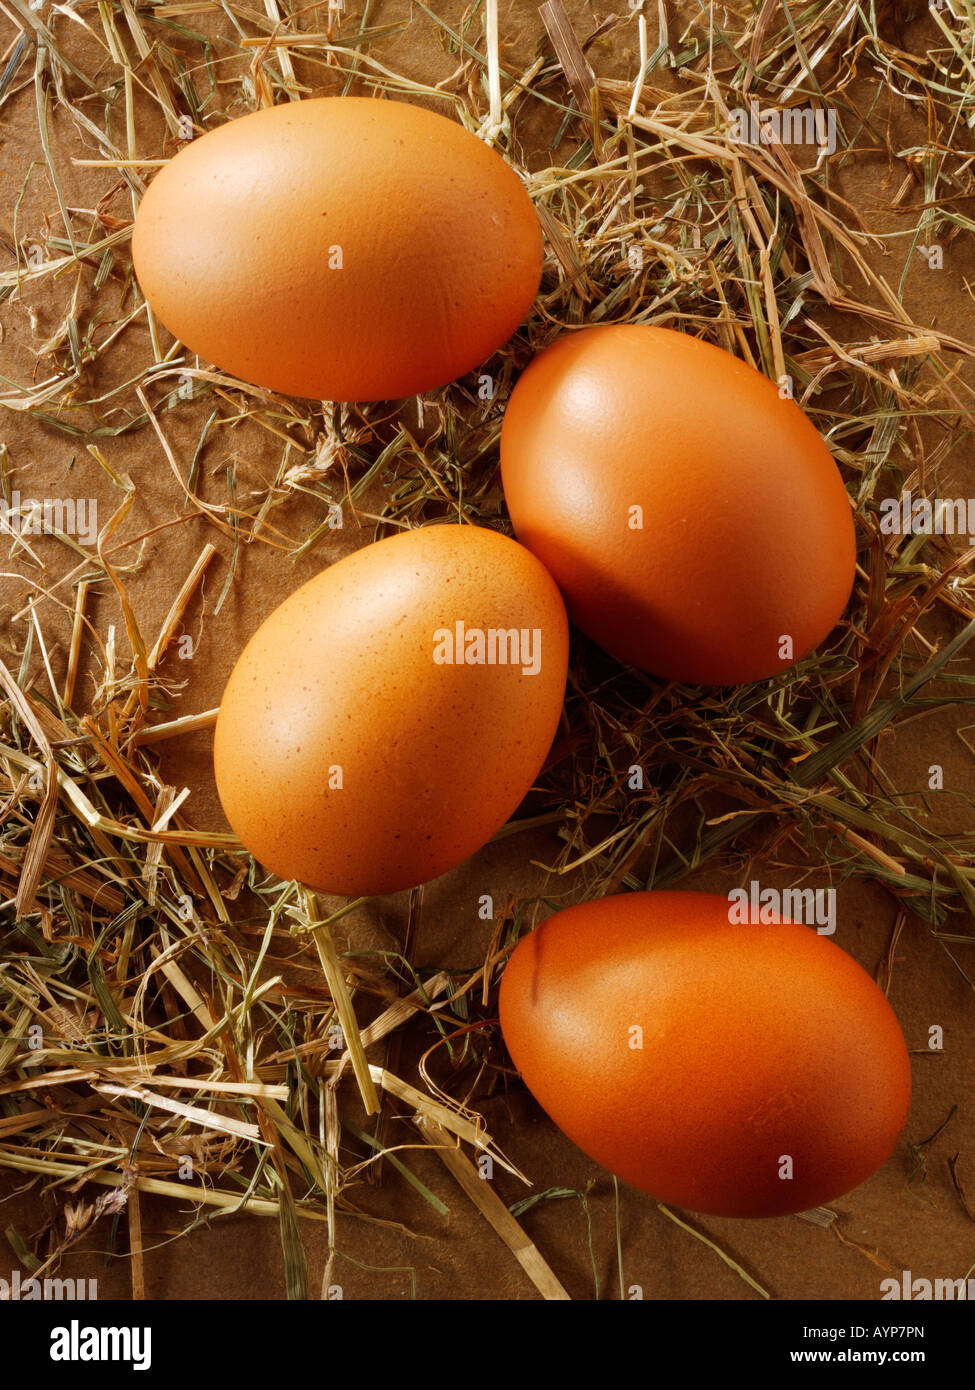 Burford organica marrone free range uova di gallina - Soft focus Foto Stock